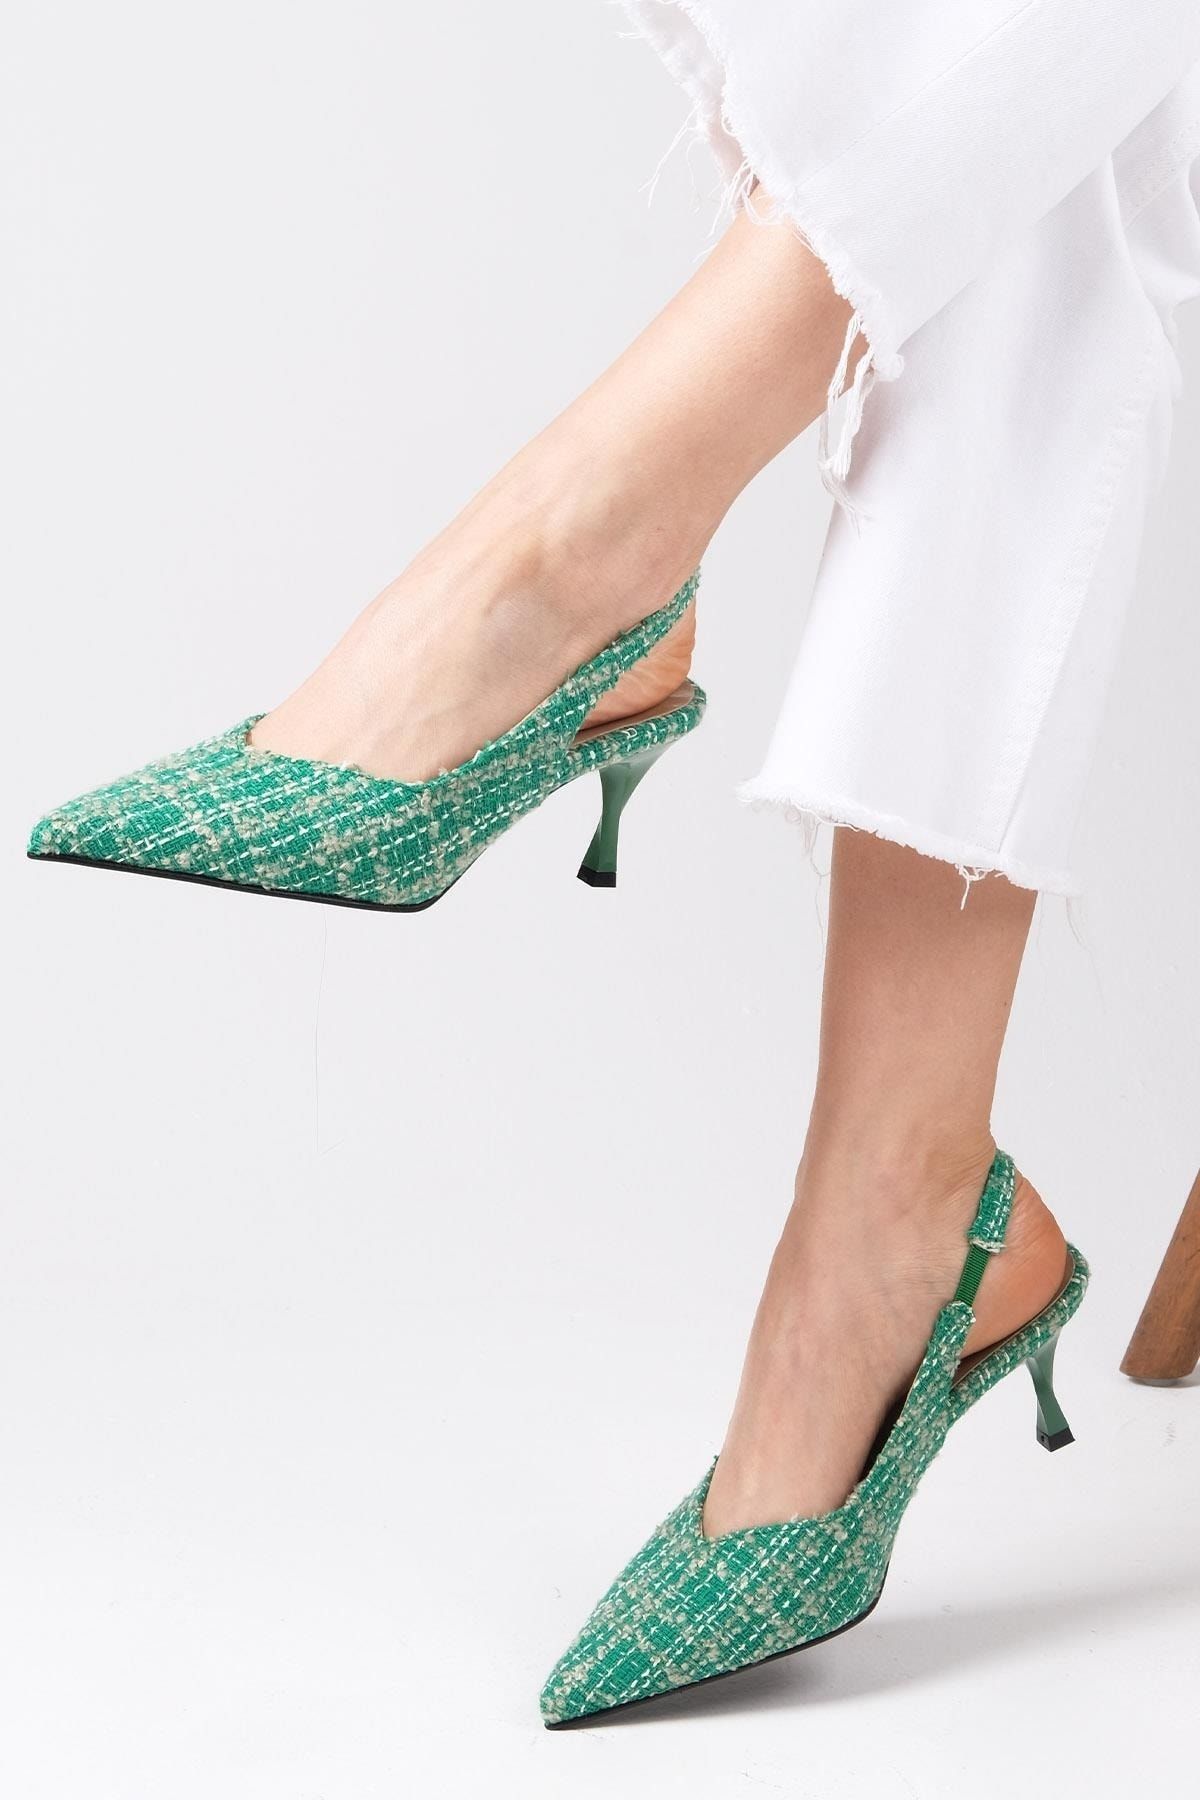 Mio Gusto Justine Yeşil Renk Tüvit Kumaş Kadın Topuklu Ayakkabı